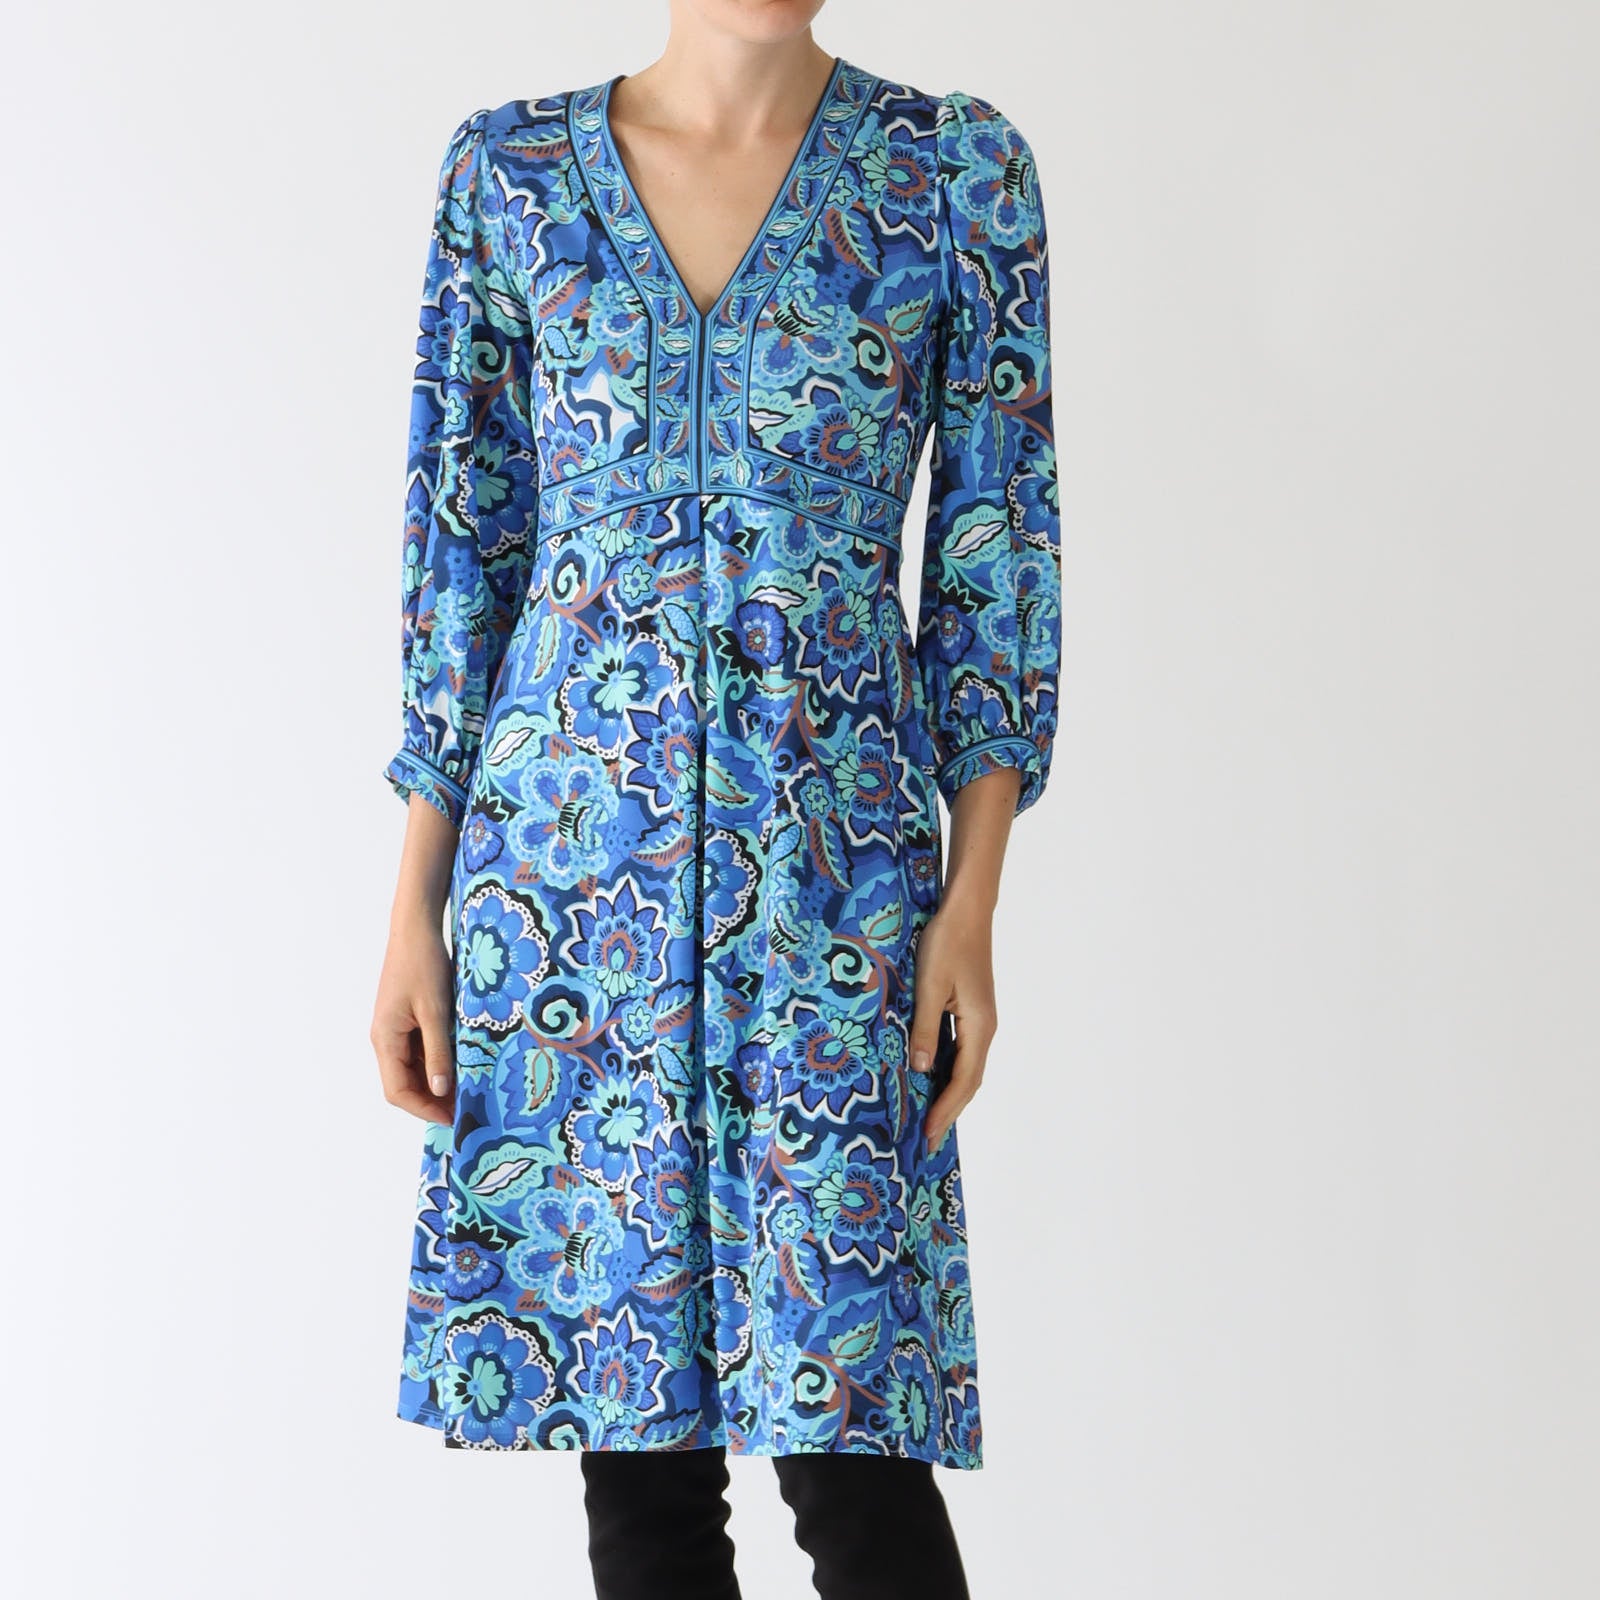 Klaudia Blue Floral Printed Jersey Dress